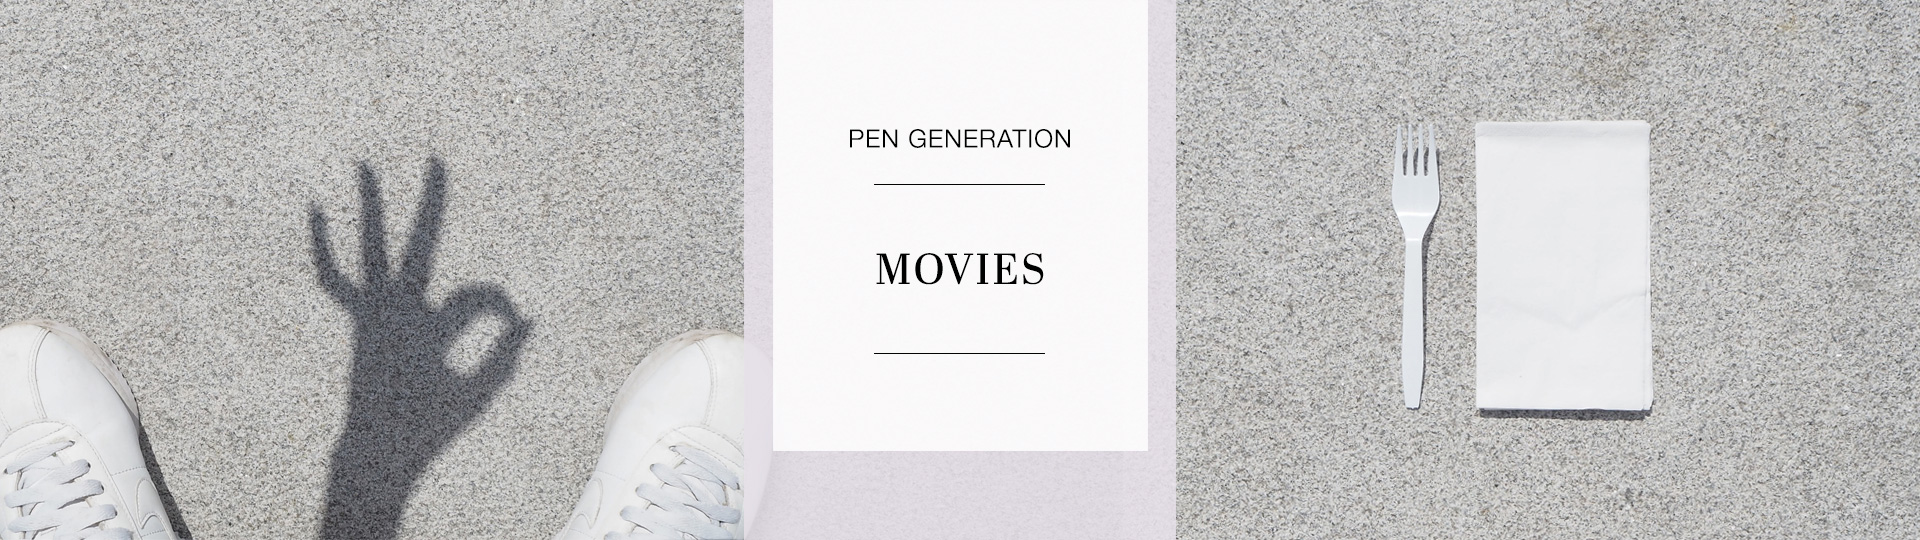 PEN Generation Movies